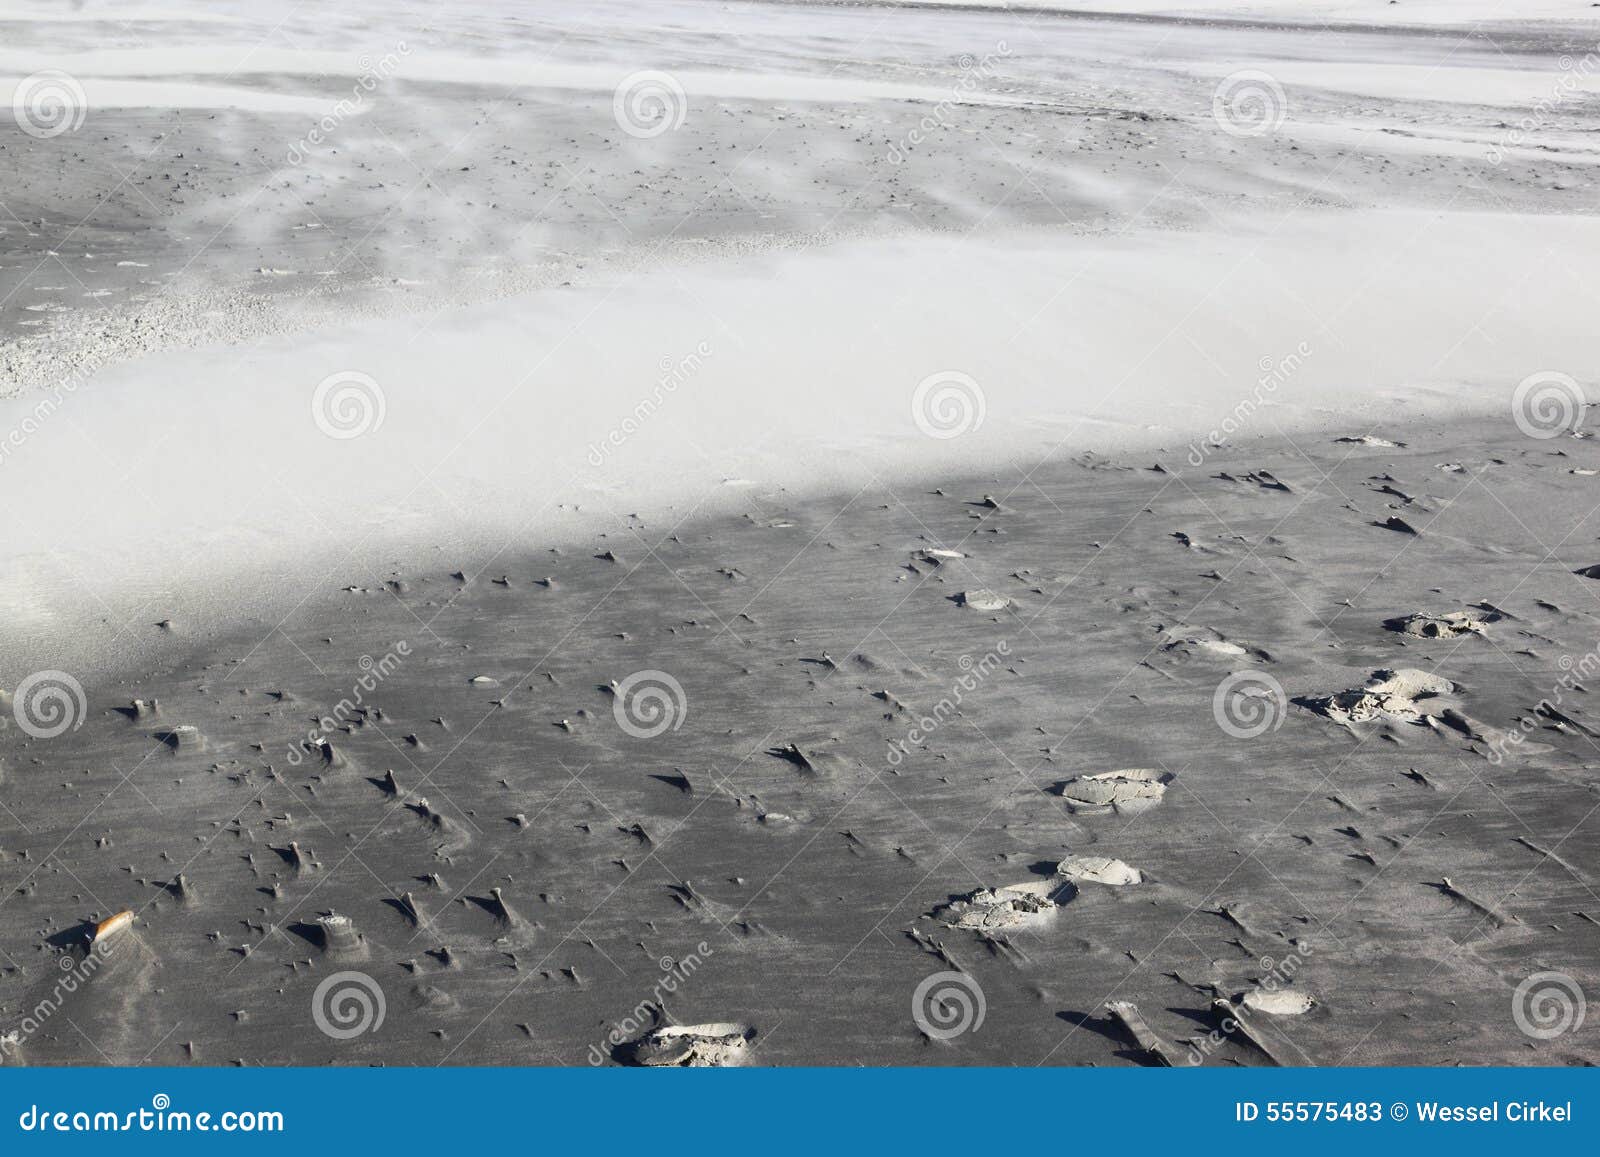 blowing wind causes drift-sand at dutch ameland island